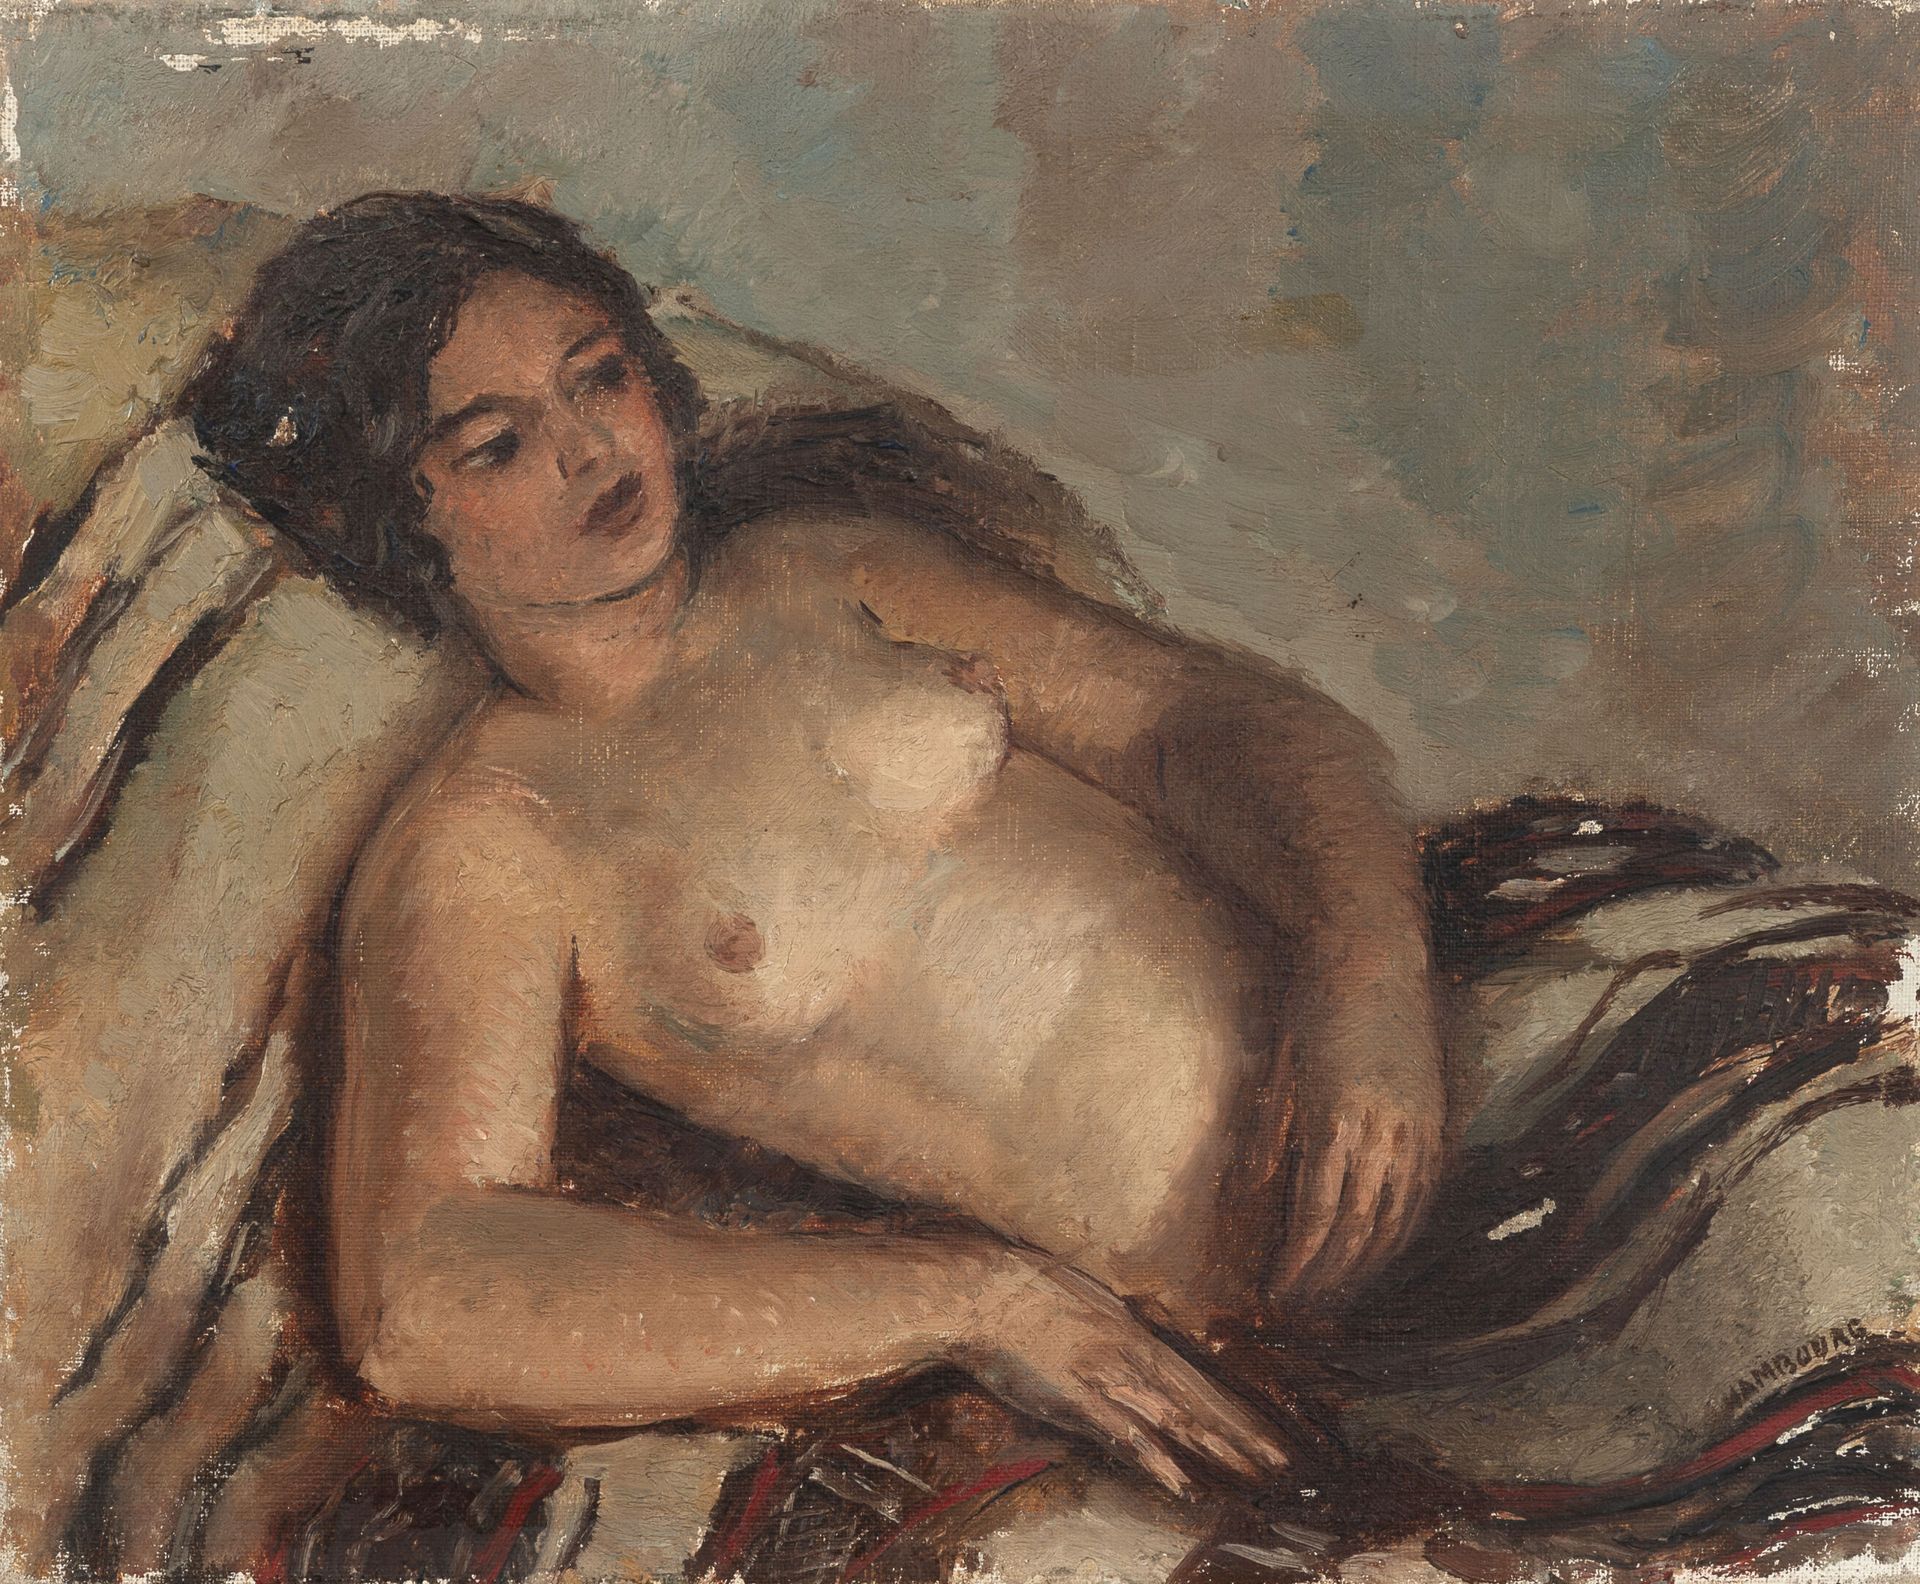 André HAMBOURG (1909-1999) Retrato de una joven reclinada, hacia 1935-40.
Óleo s&hellip;